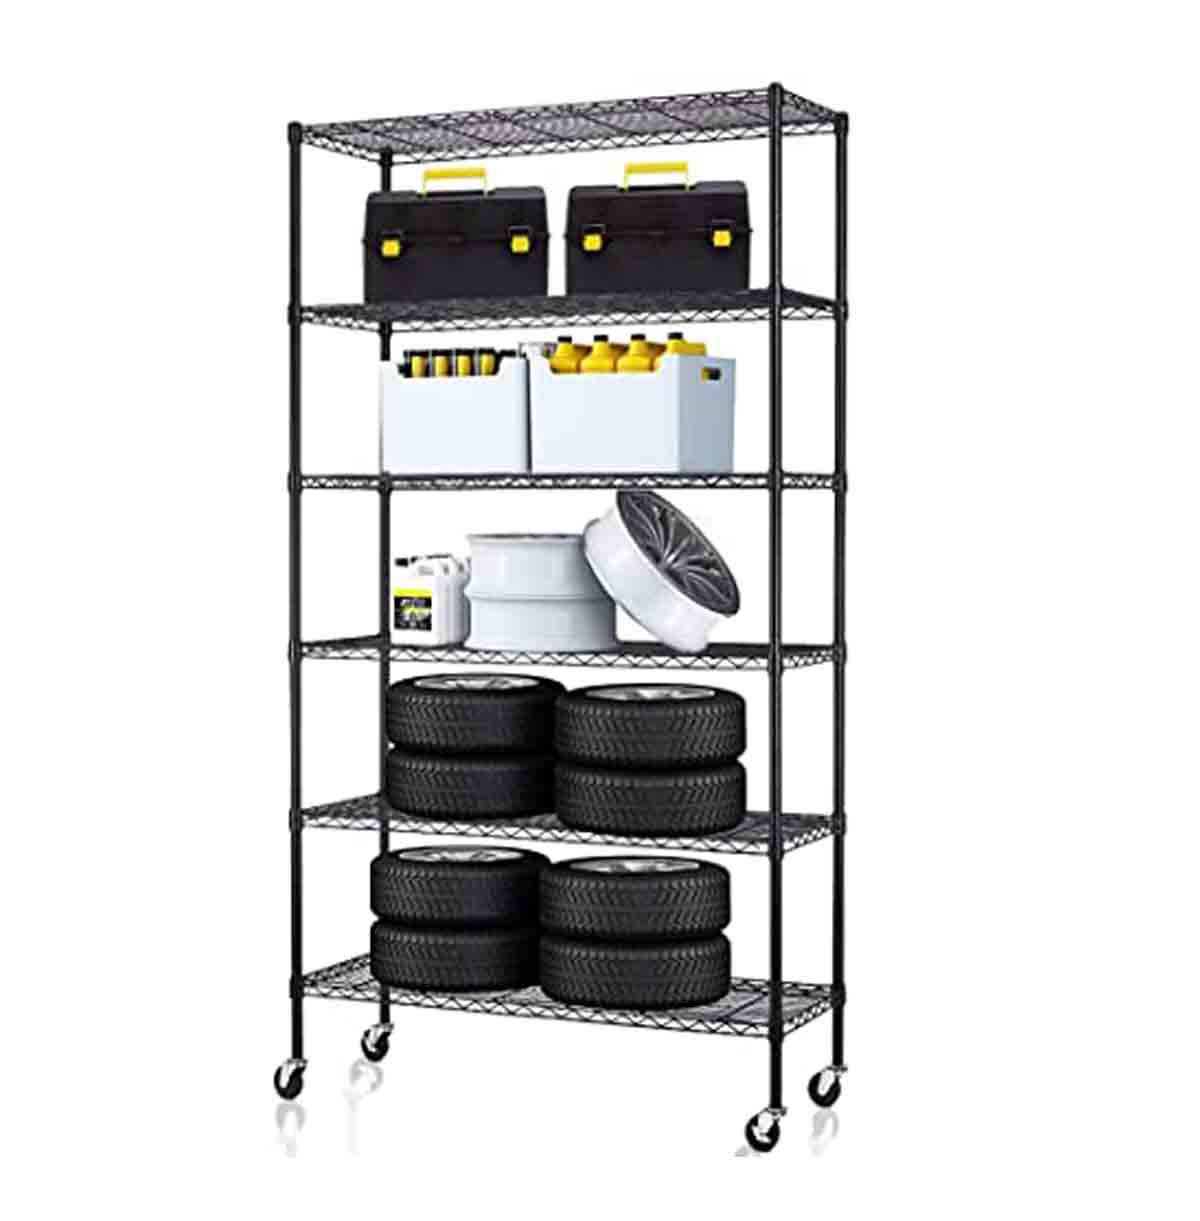 6-Tier Black Wire Shelving Unit / Black Metal Shelf for Industrial Warehouse